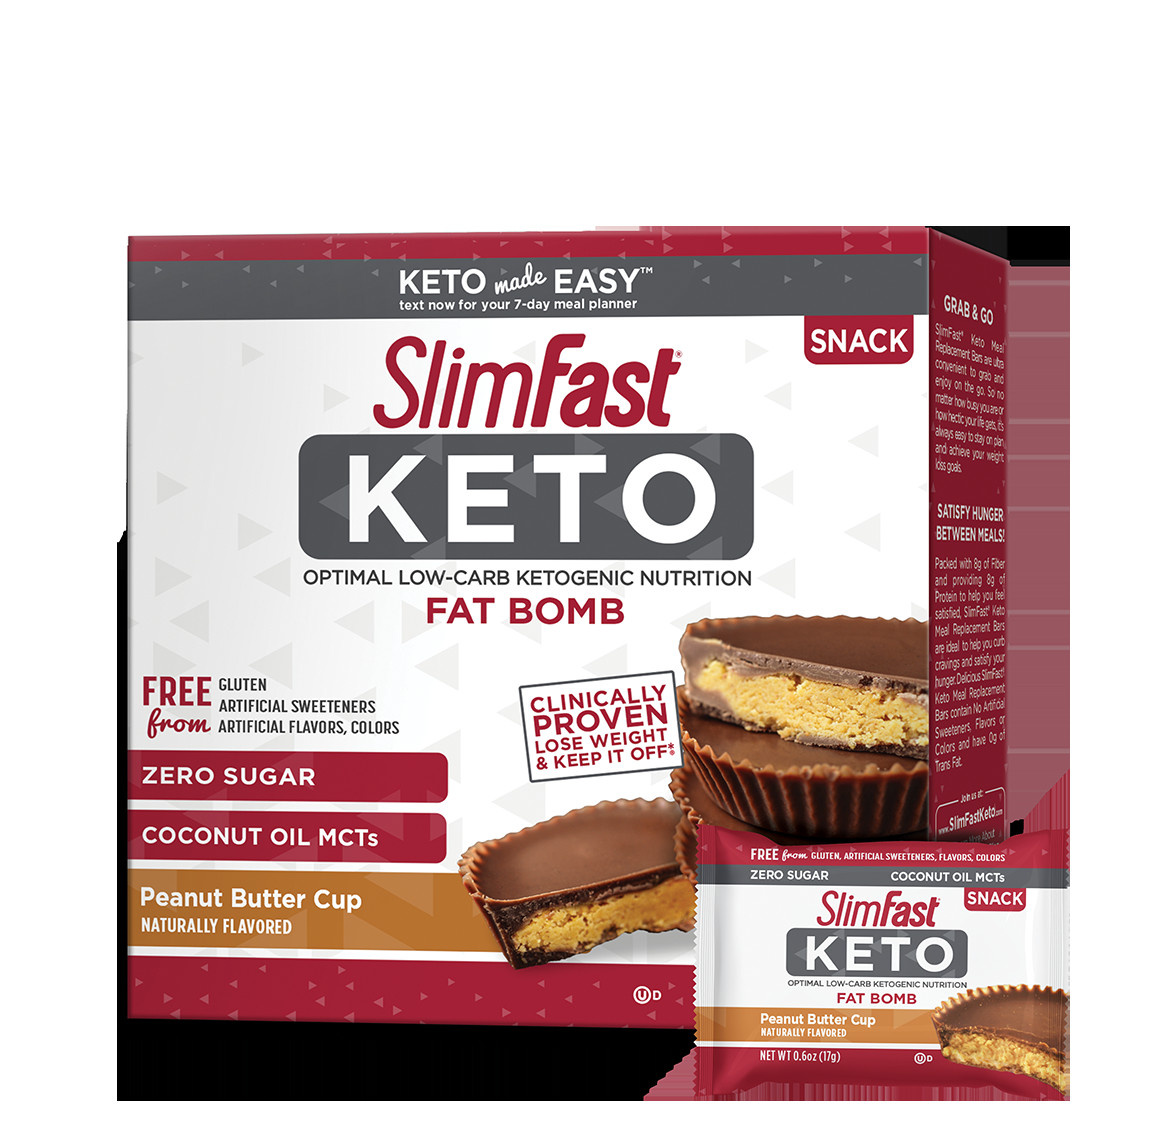 Slimfast Keto Diet Plan
 Slim Fast Keto Fat Bombs [Reviews] Is It SCAM Diet Plan